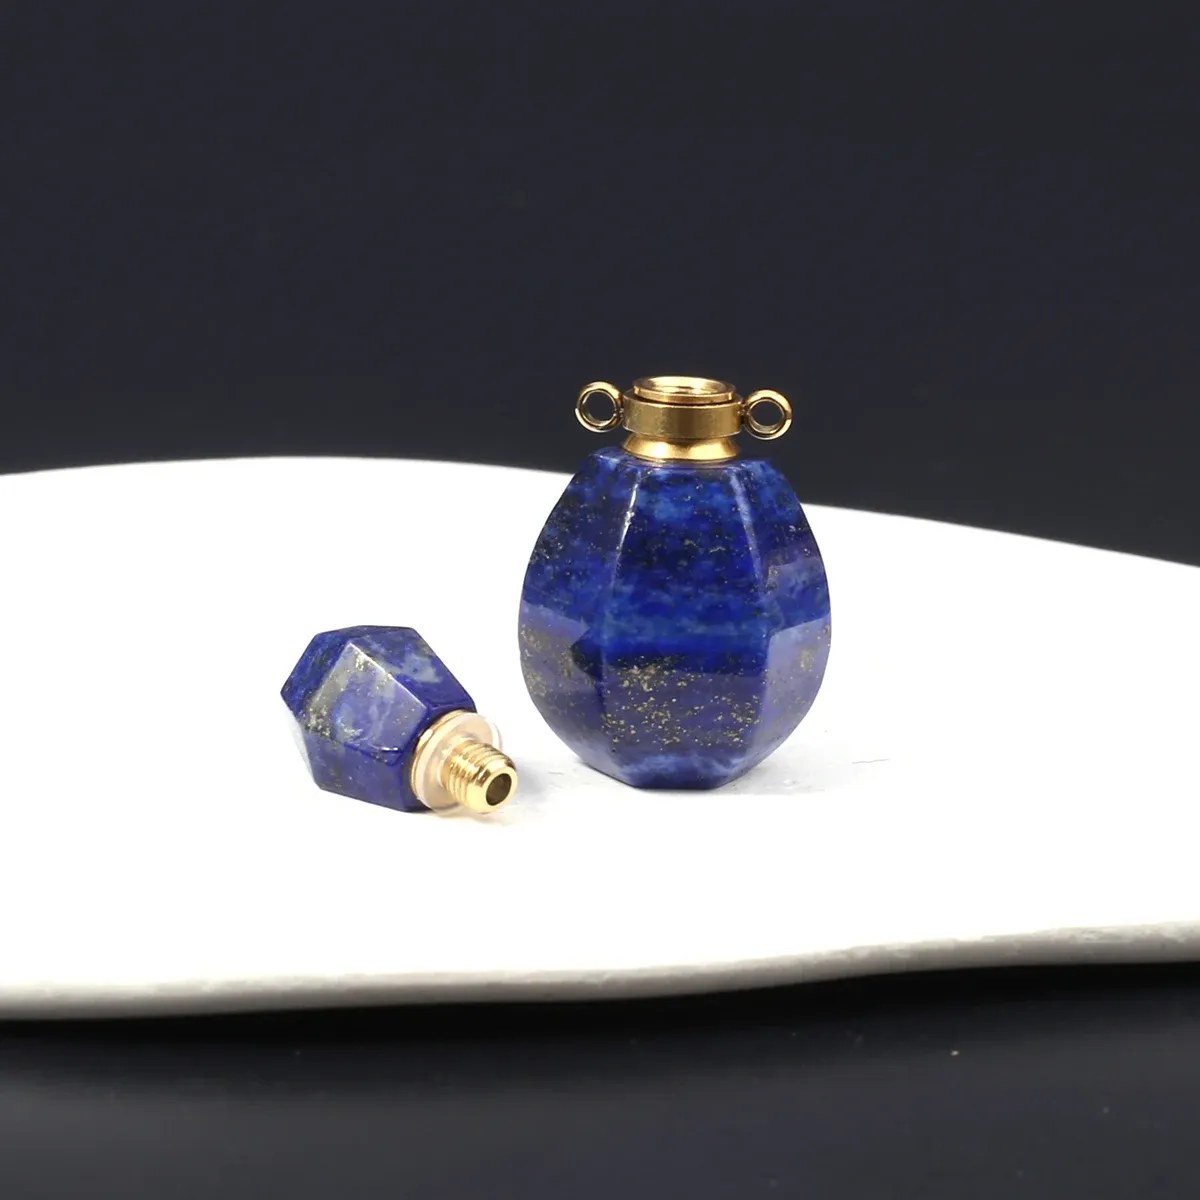 10 Kinds Natural Lapis Lazuli Random Shape Perfume Bottle Pendant Essential Oil Diffuser Charm Jewelry DIY Making Accessories